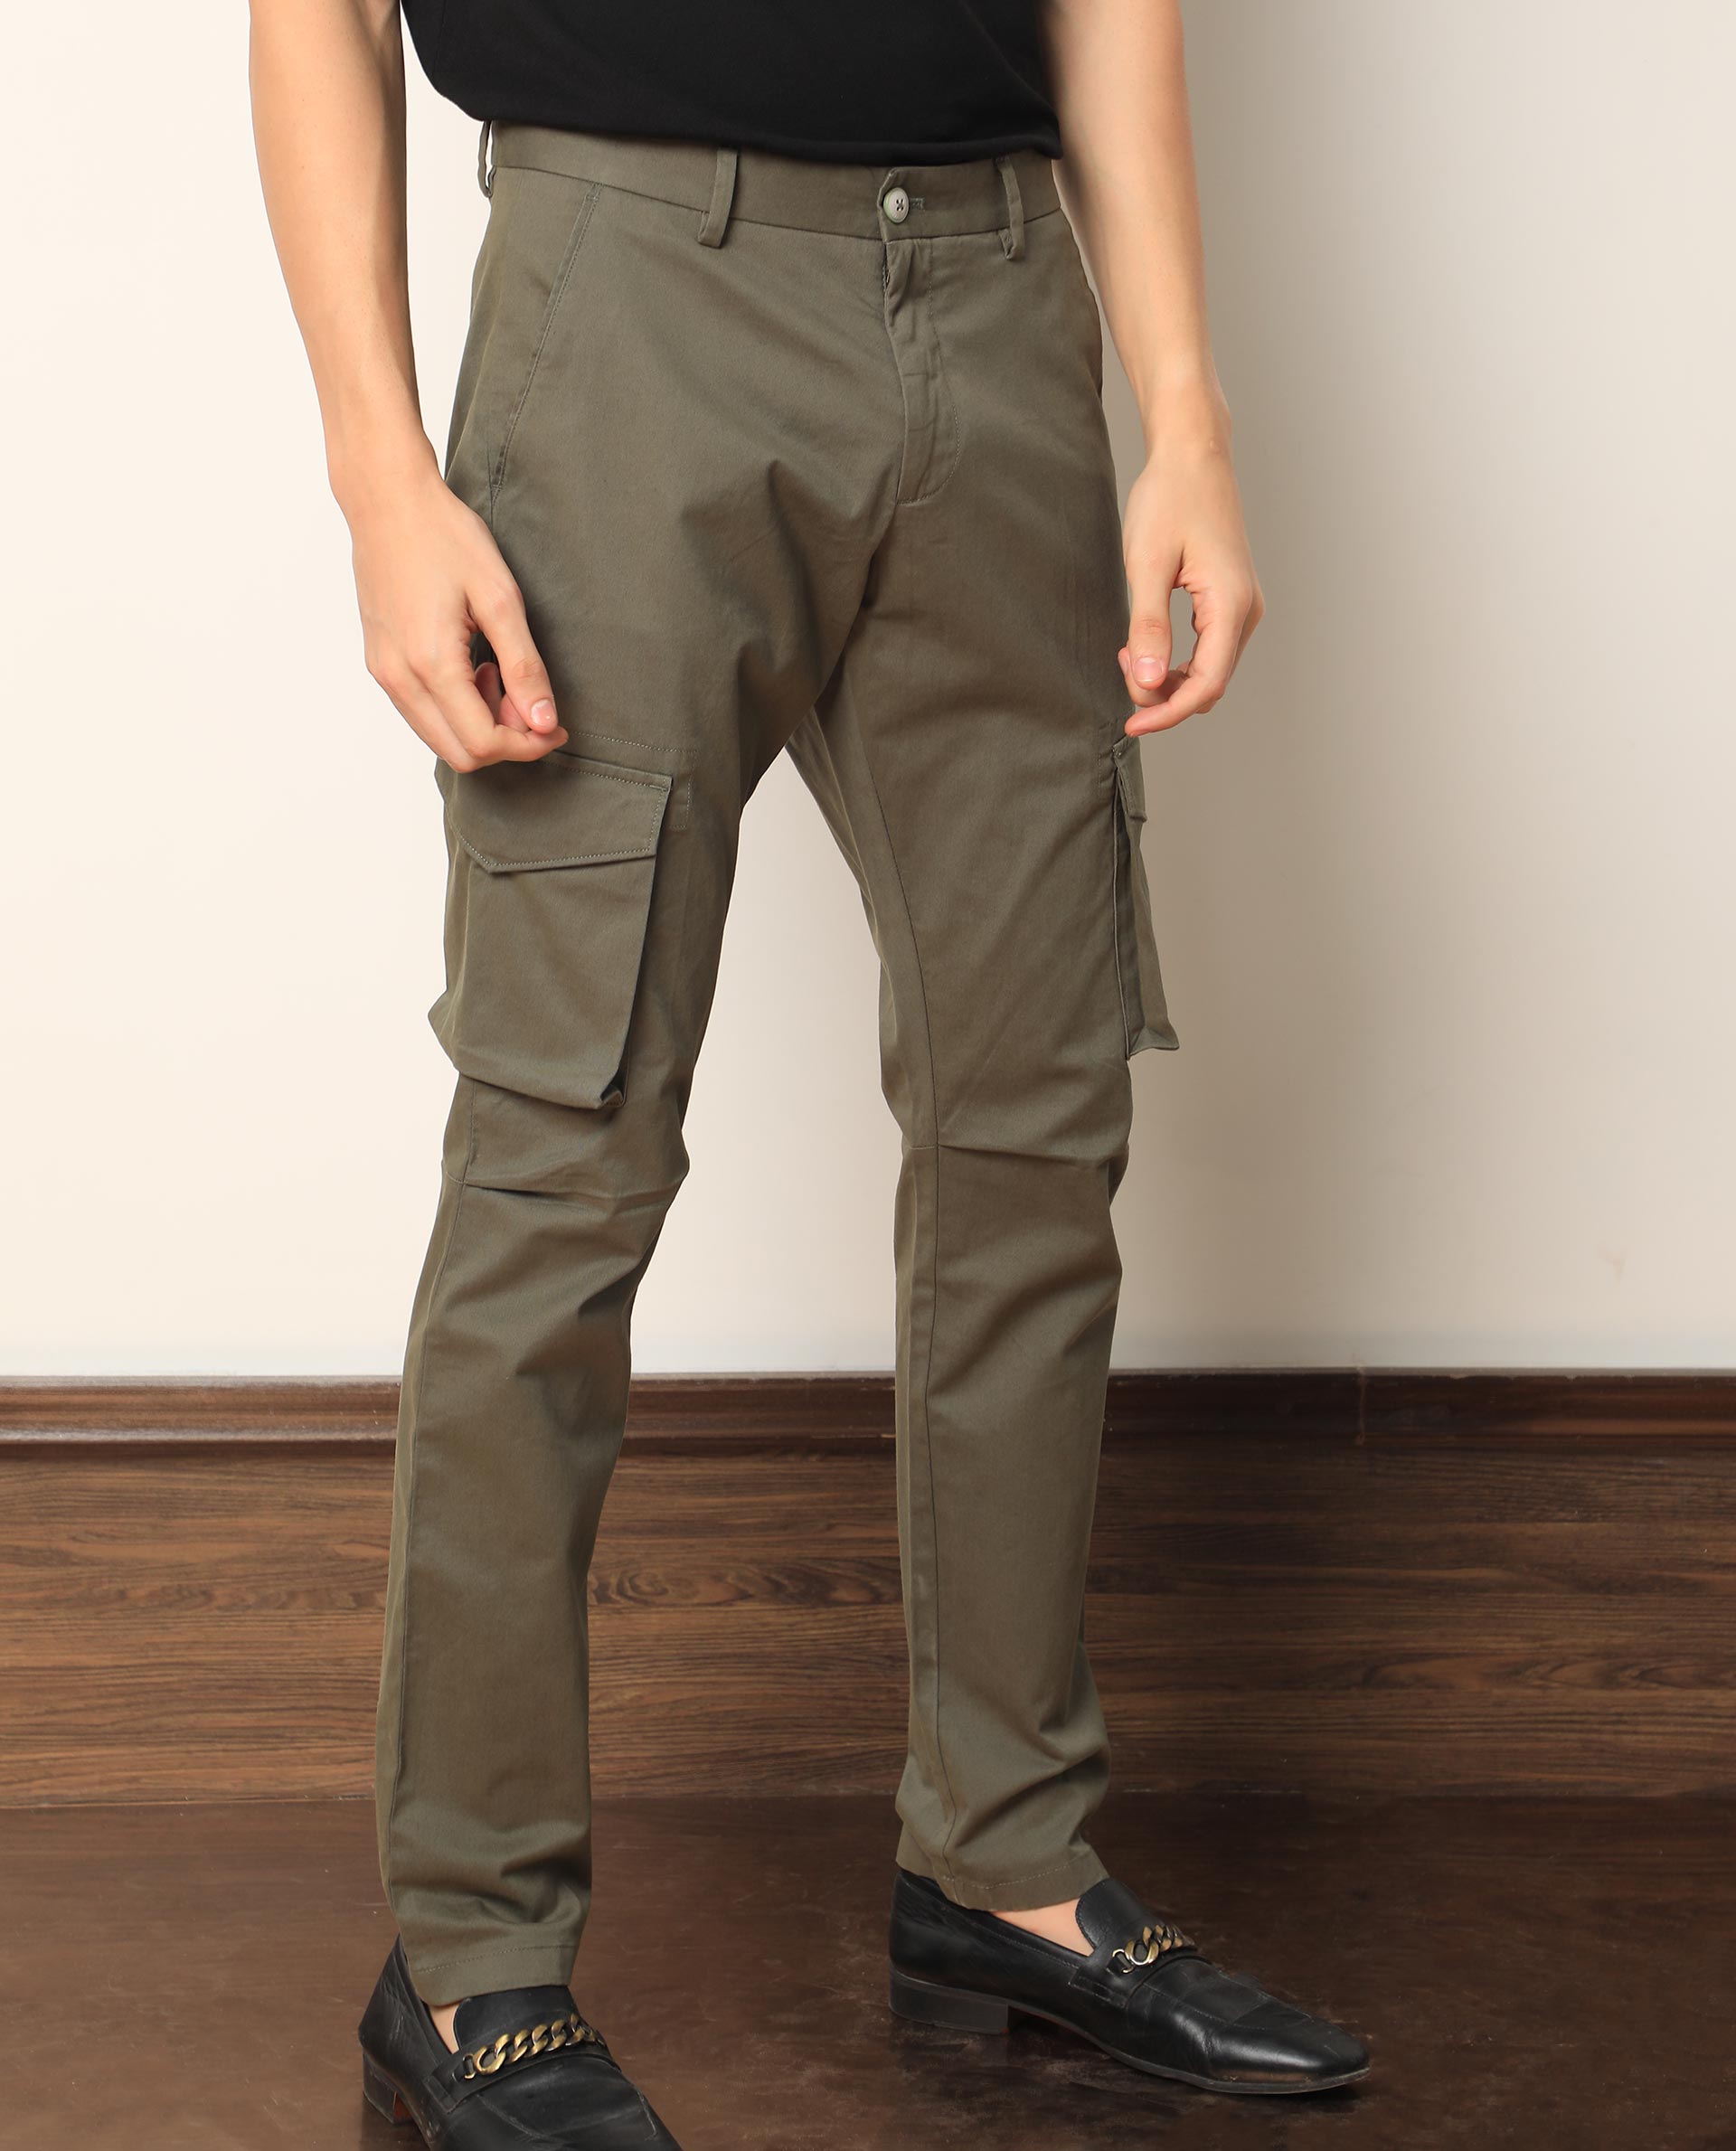 UDIYO Men Casual Solid Color Pockets Waist Drawstring Ankle Tied Skinny  Cargo Pants - Walmart.com